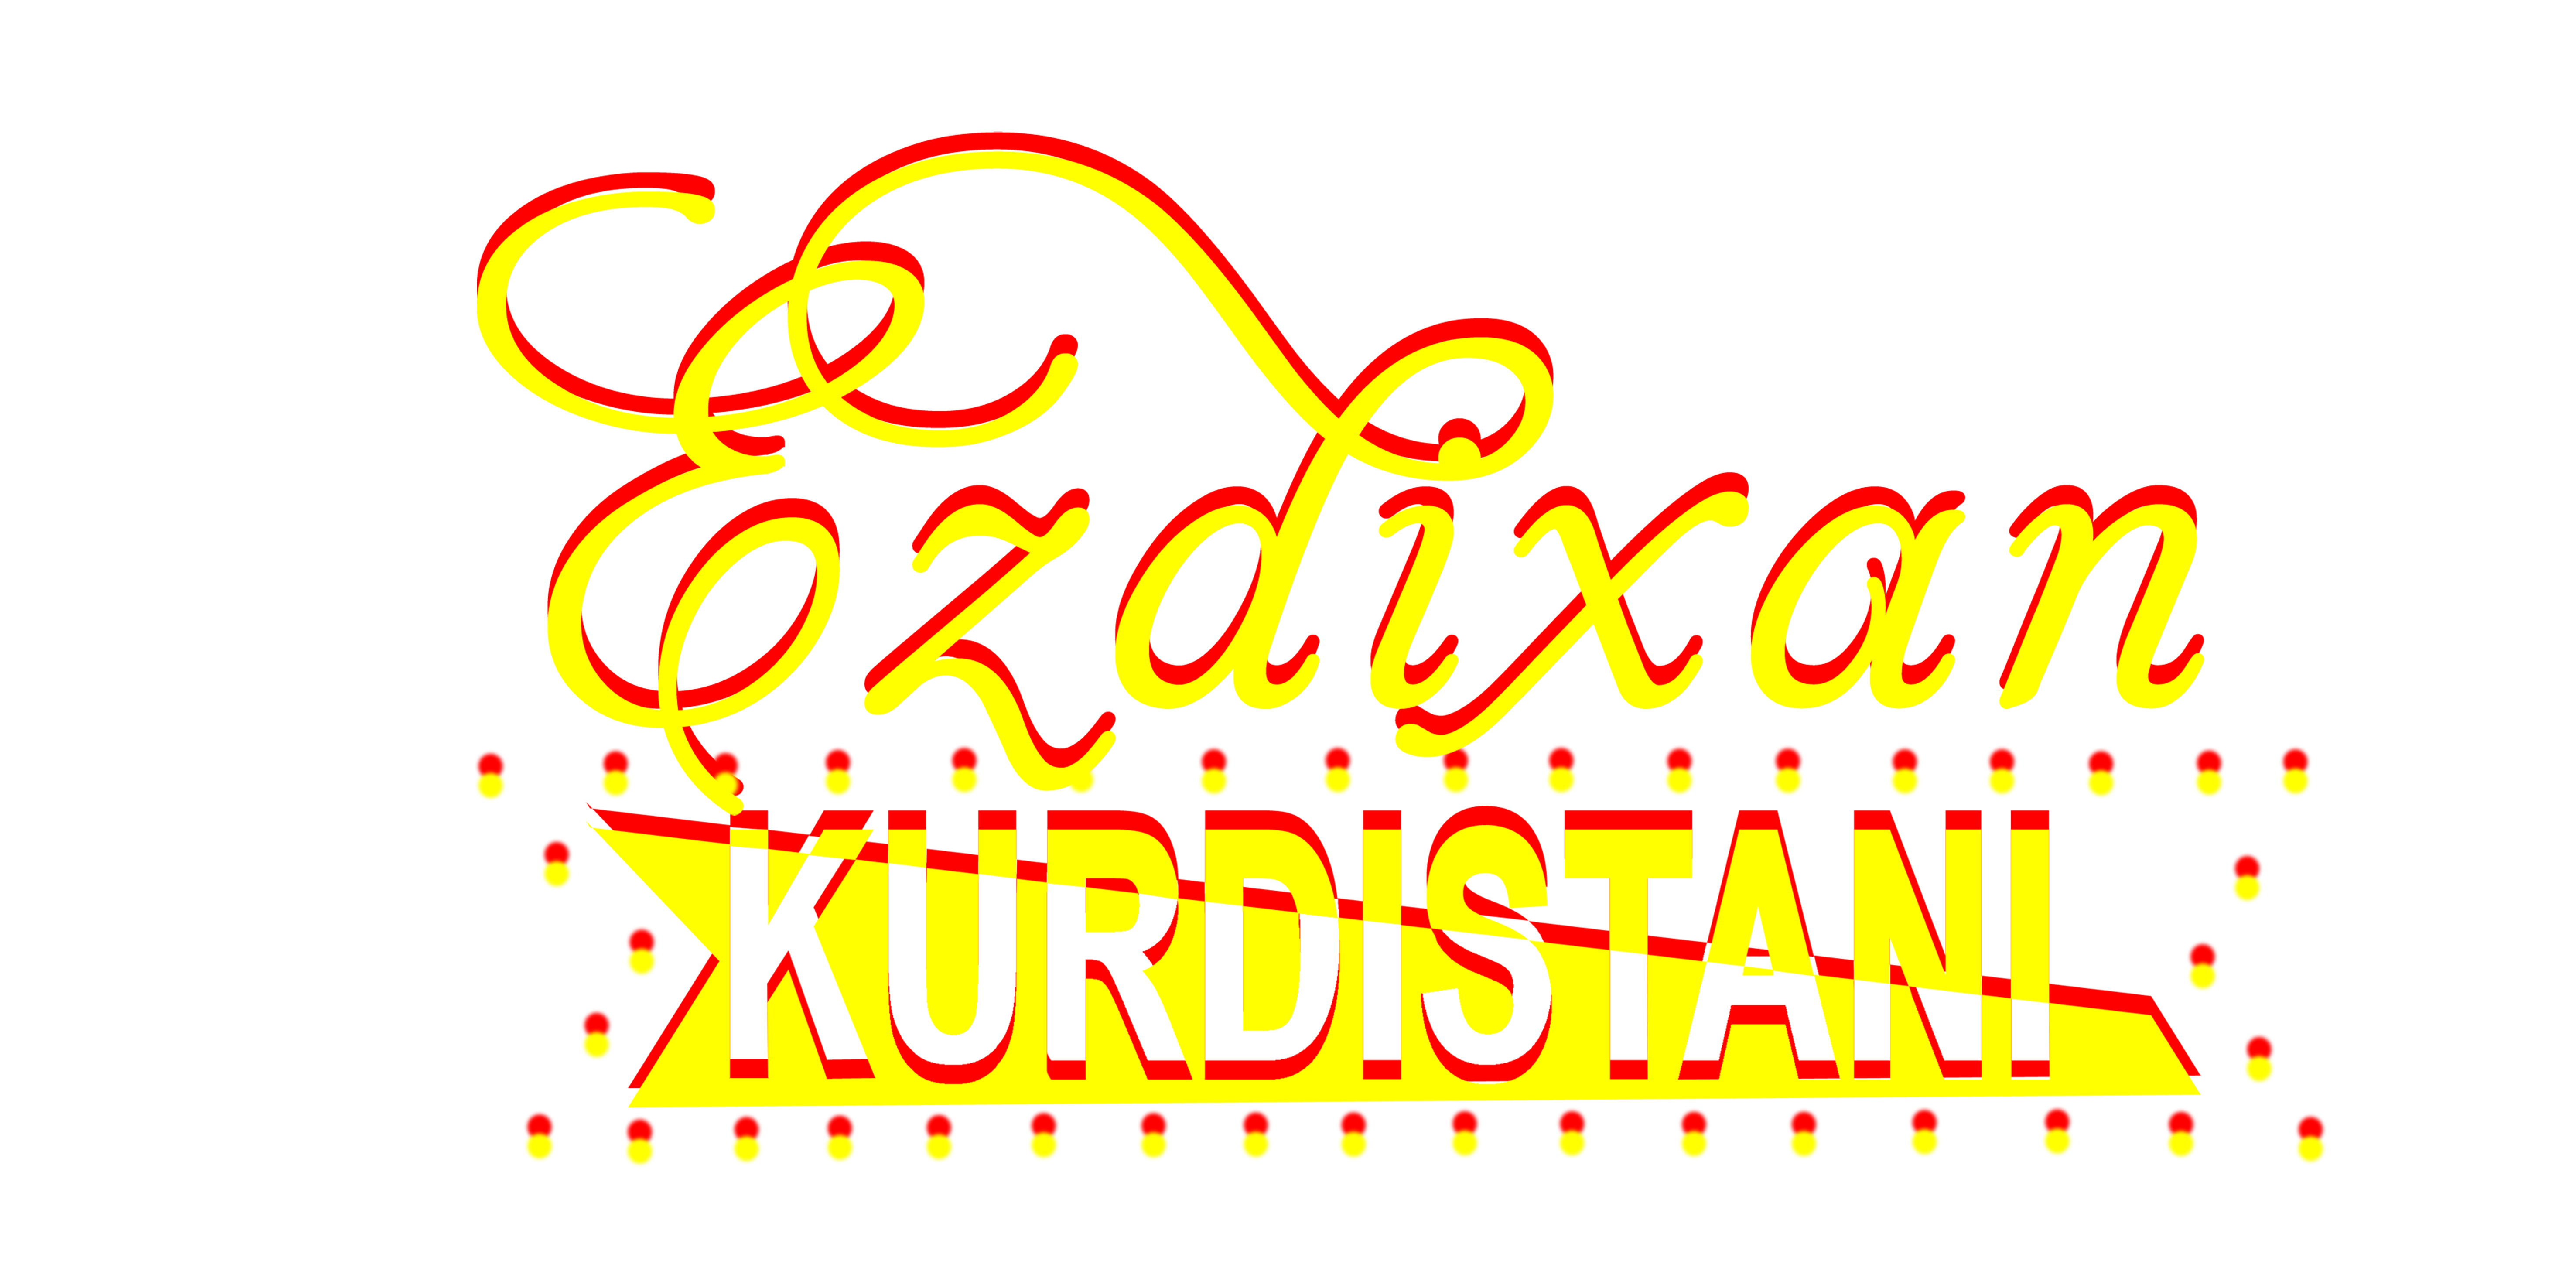 Ezdixan Kurdistani